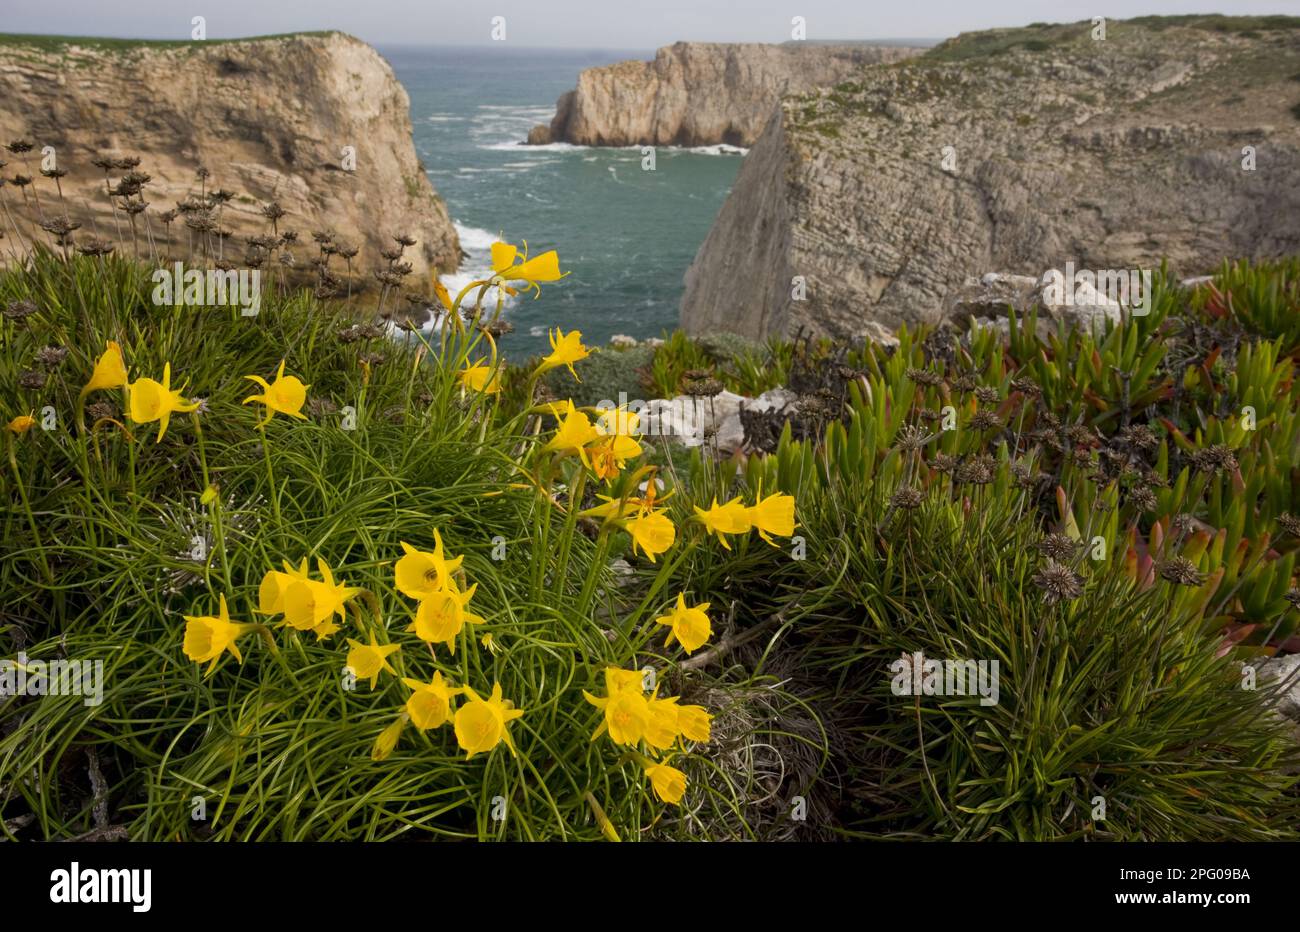 Flowering daffodil (Narcissus obesus), on cliff habitat, Cape St. Vincent, Algarve, Portugal Stock Photo